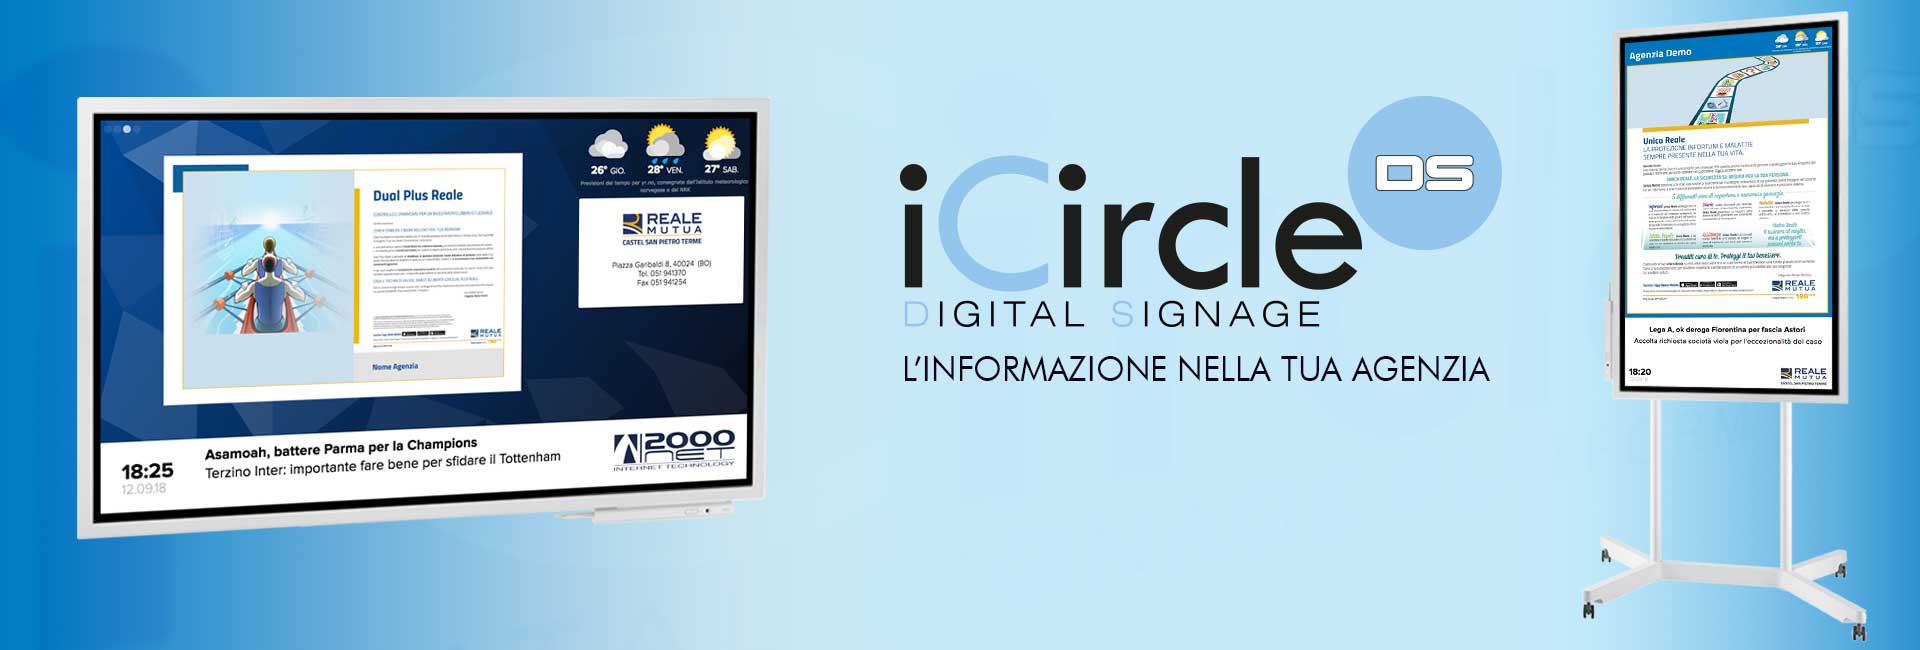 iCircle Digital Signage Agenzie Reale Mutua